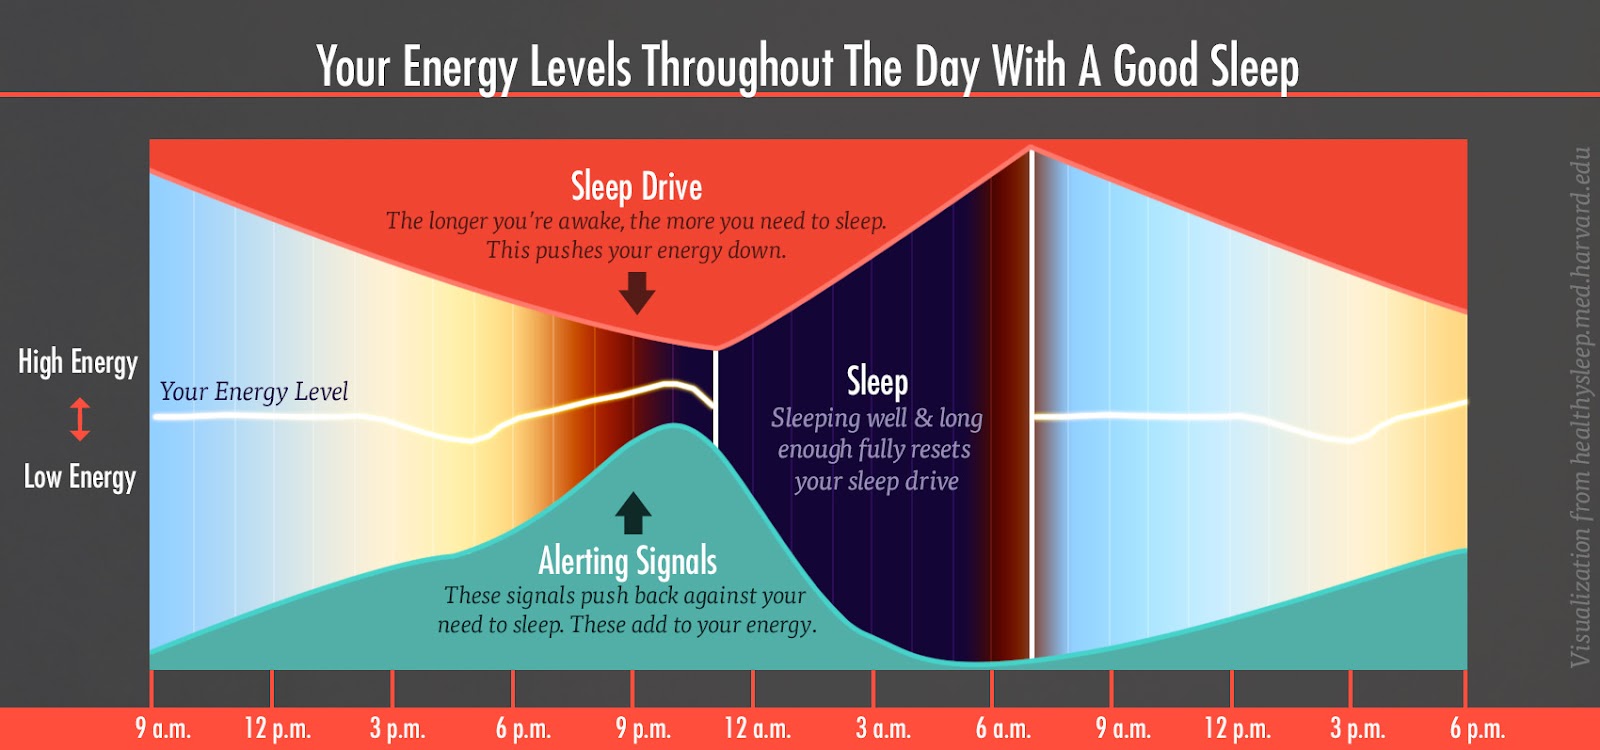 http://bonytobombshell.com/wp-content/uploads/2015/05/energy-levels-sleep-drive-alert-chart-1-bony-bombshell.jpg